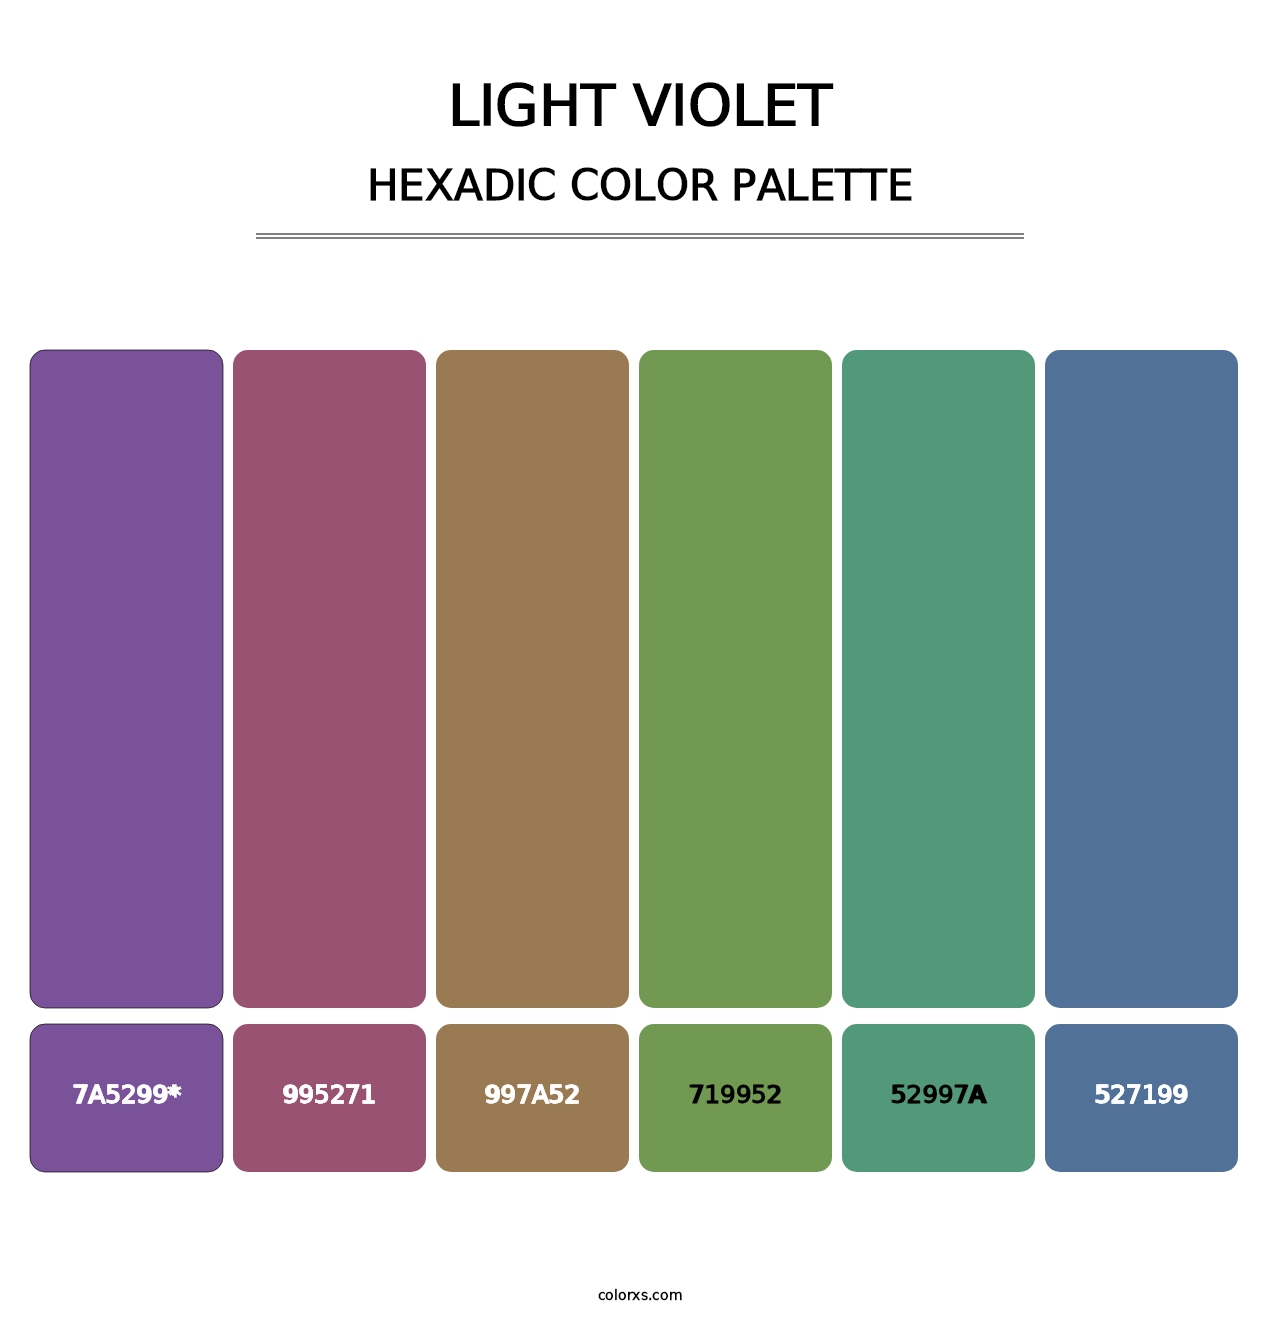 Light Violet - Hexadic Color Palette